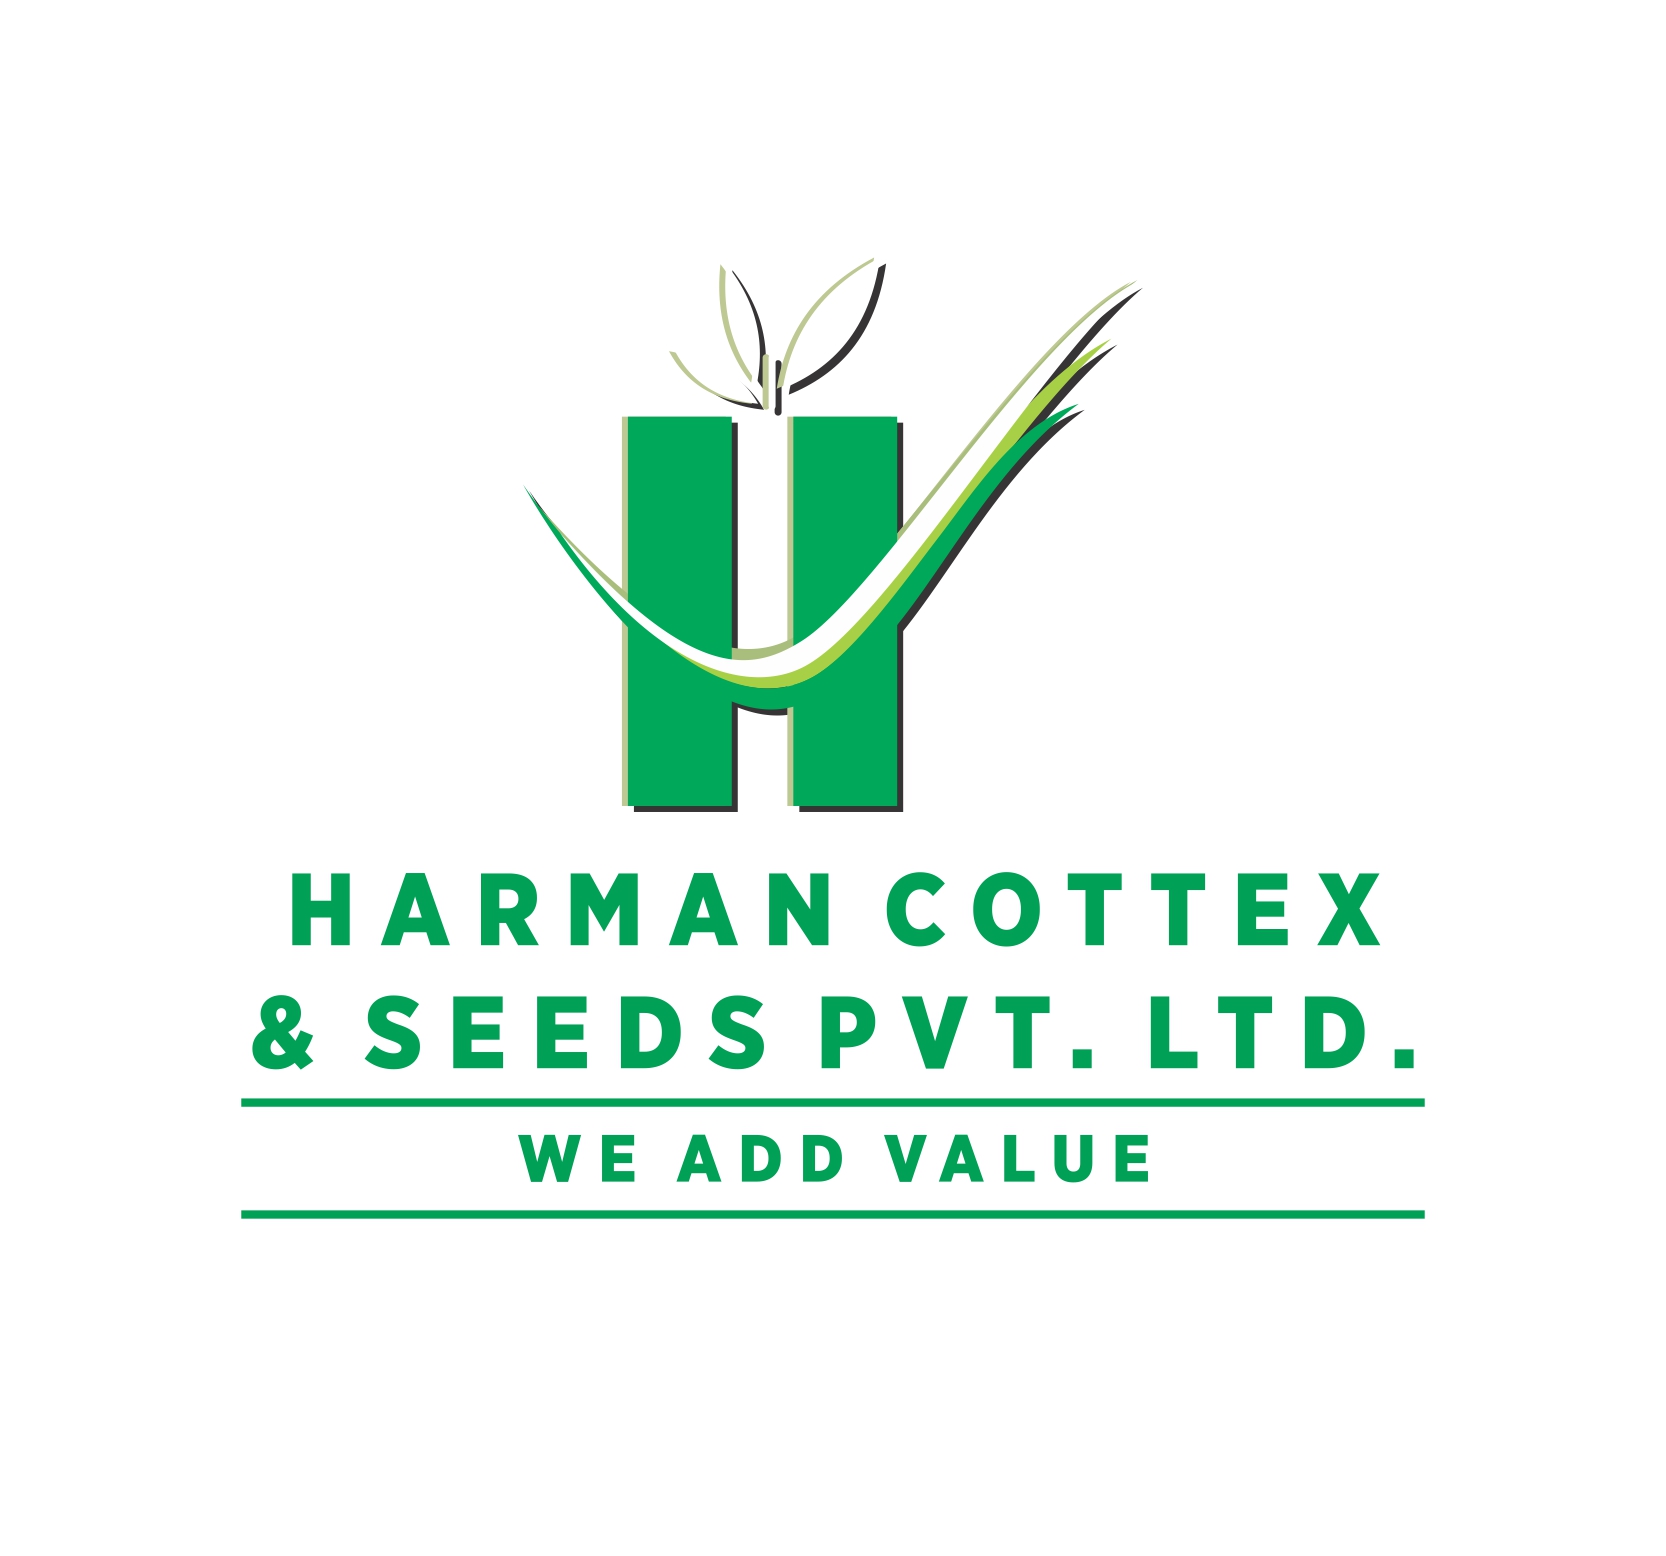 HARMAN COTTEX & SEEDS PVT. LTD.